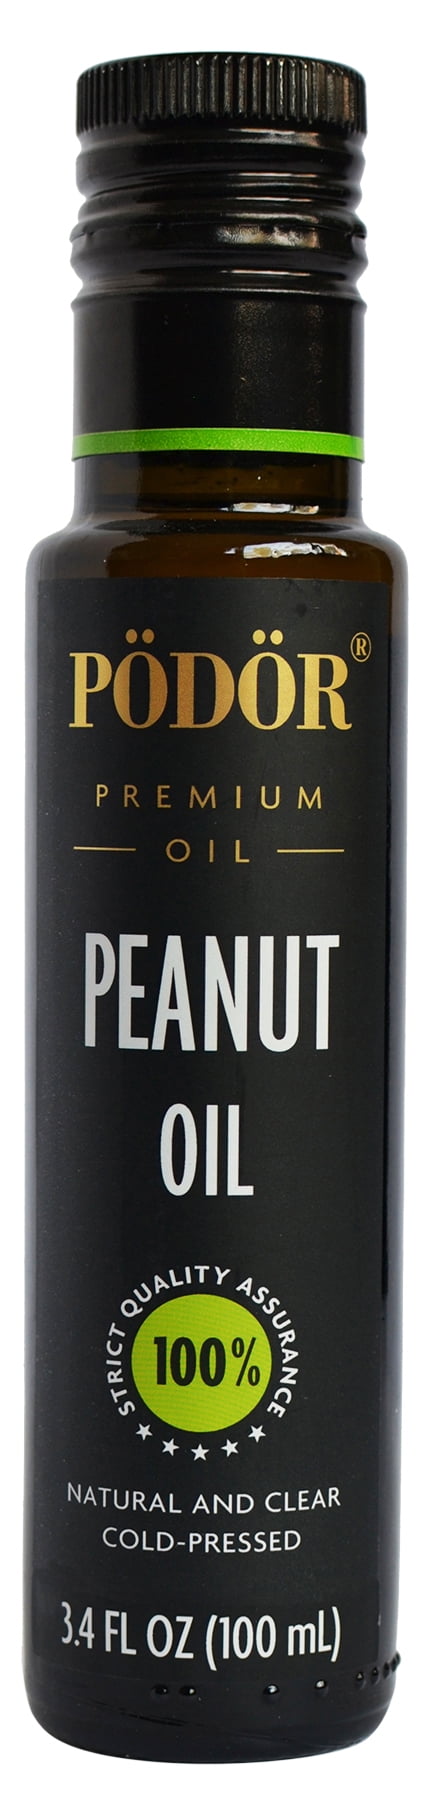 PÖDÖR Premium Peanut Oil - 3.4 fl. Oz. - Cold-Pressed, 100% Natural ...